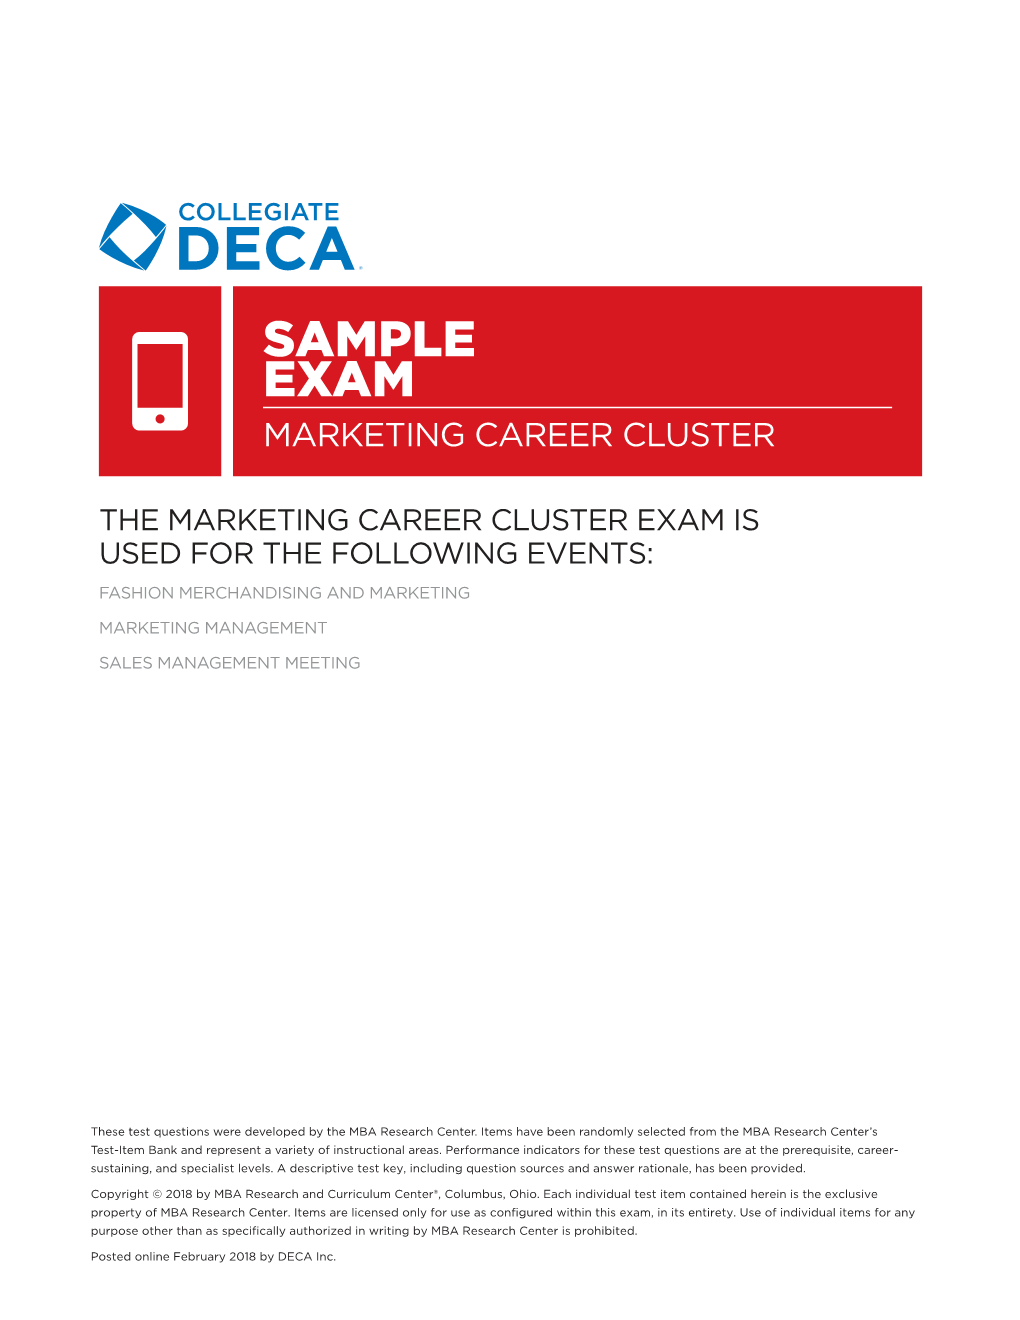 Sample Exam Marketing Career Cluster